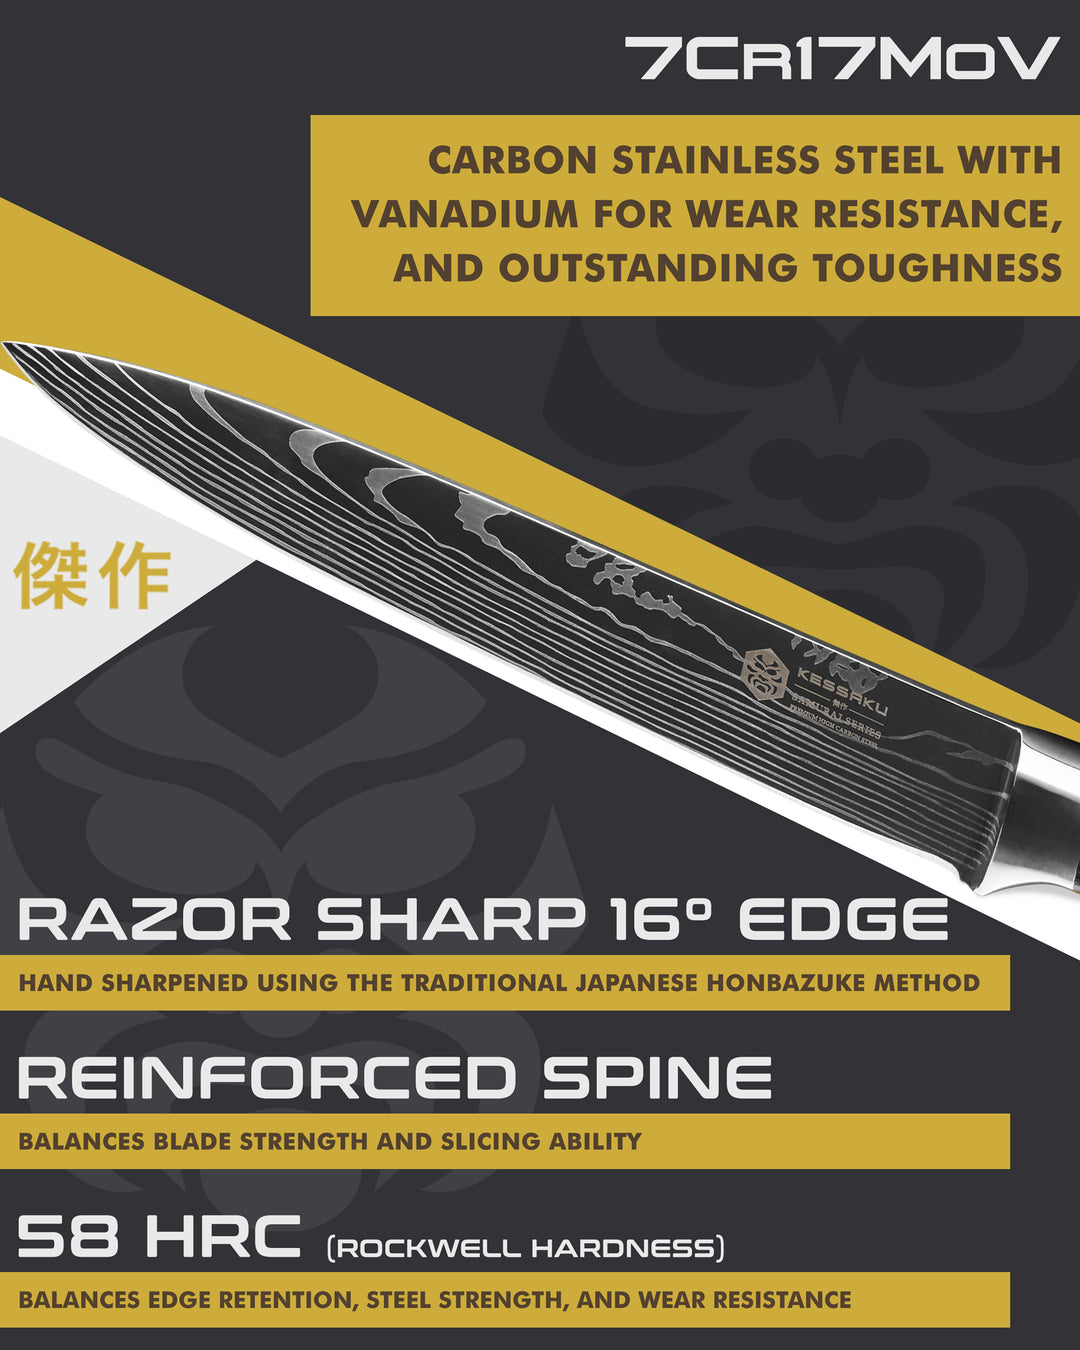 Kessaku Samurai Carving Knife features 7Cr17MoV steel, 58 HRC, 16 degree edge, reinforced spine